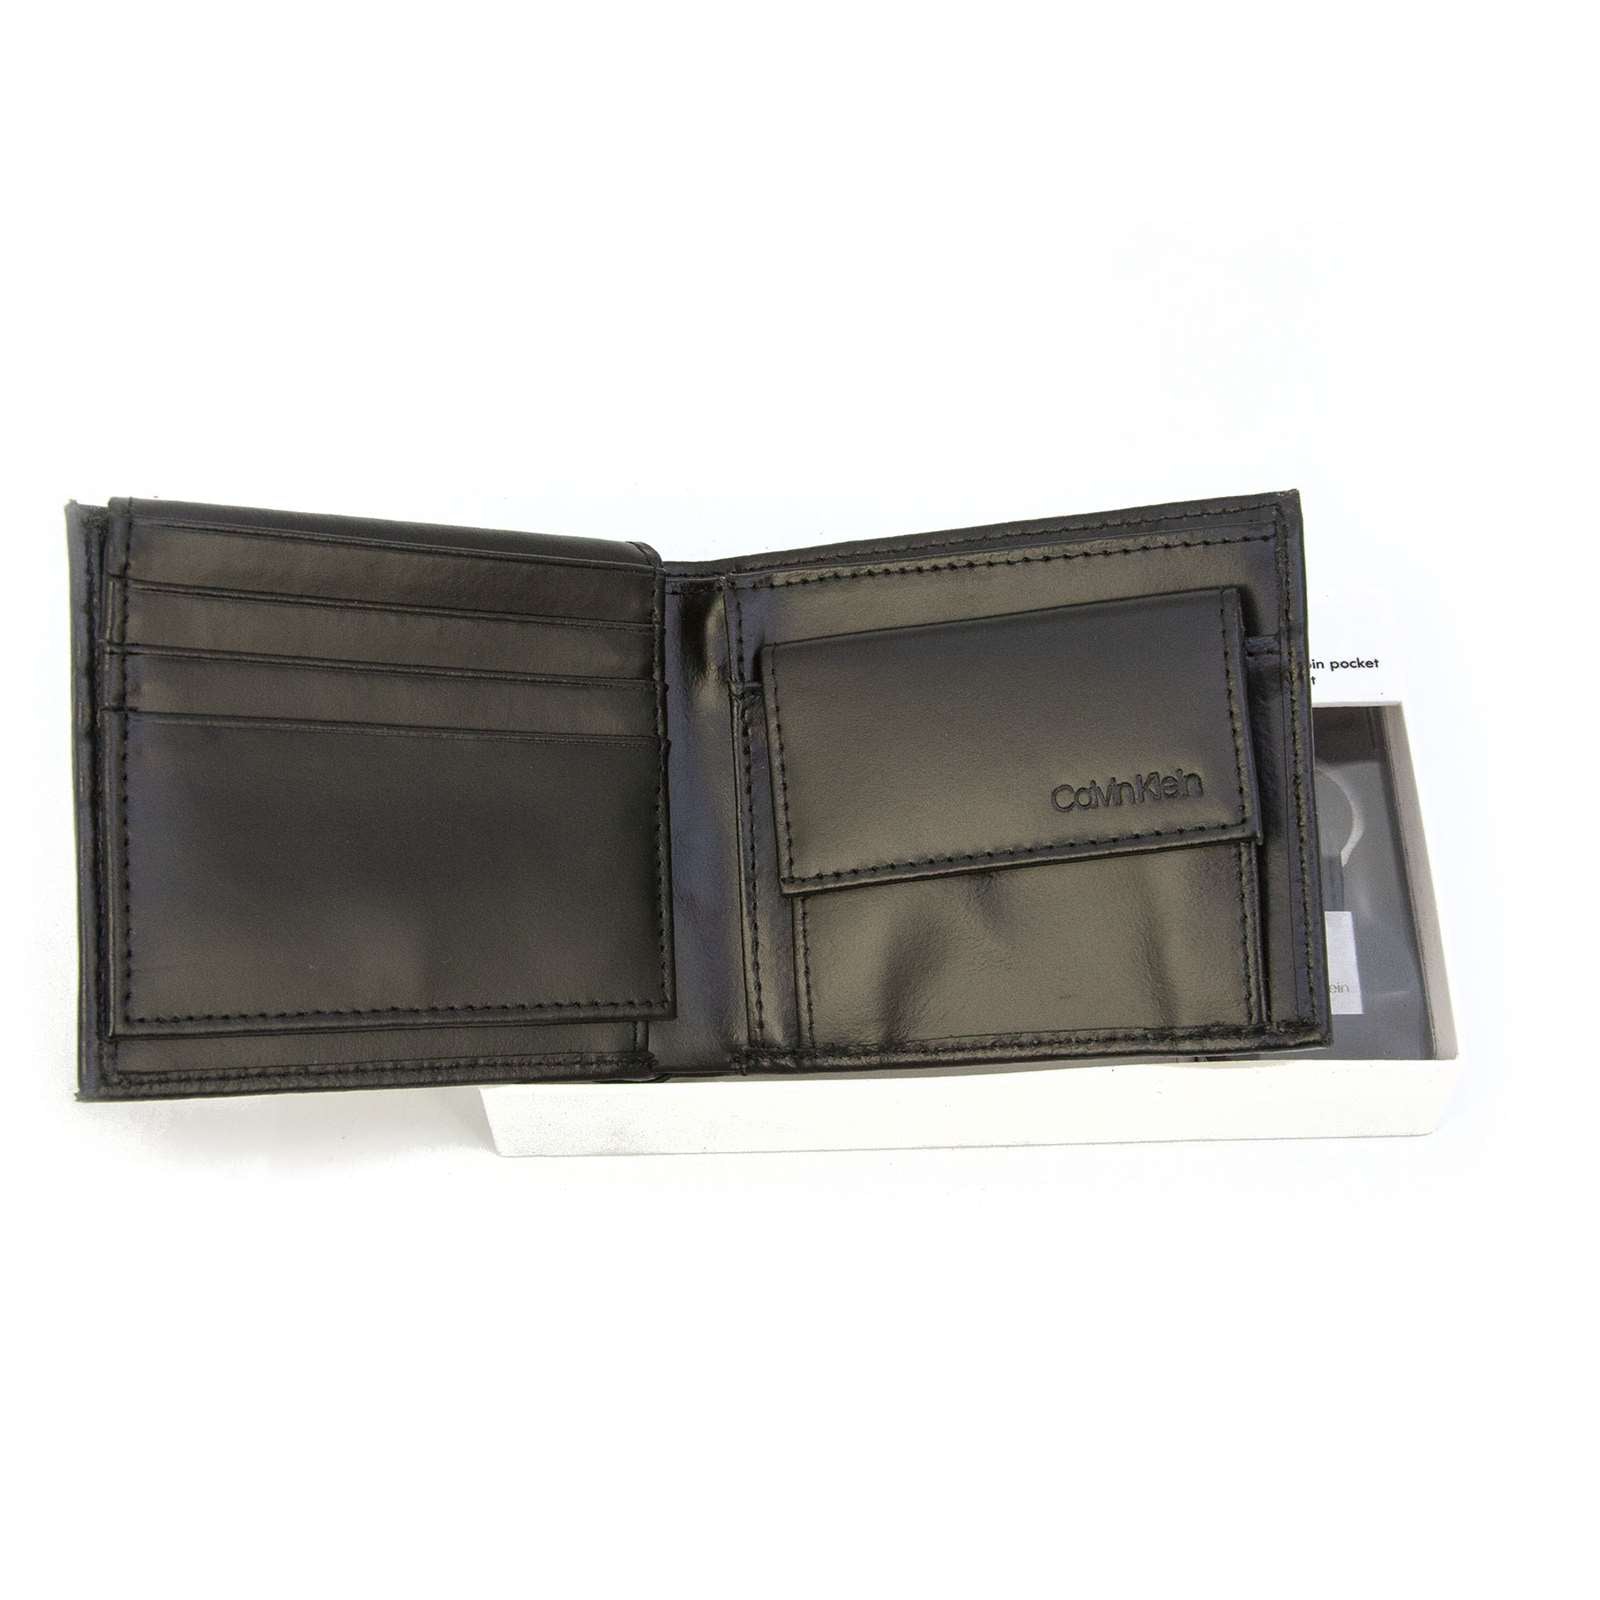 Calvin Klein Men Passcase Wallet W/Key Fob